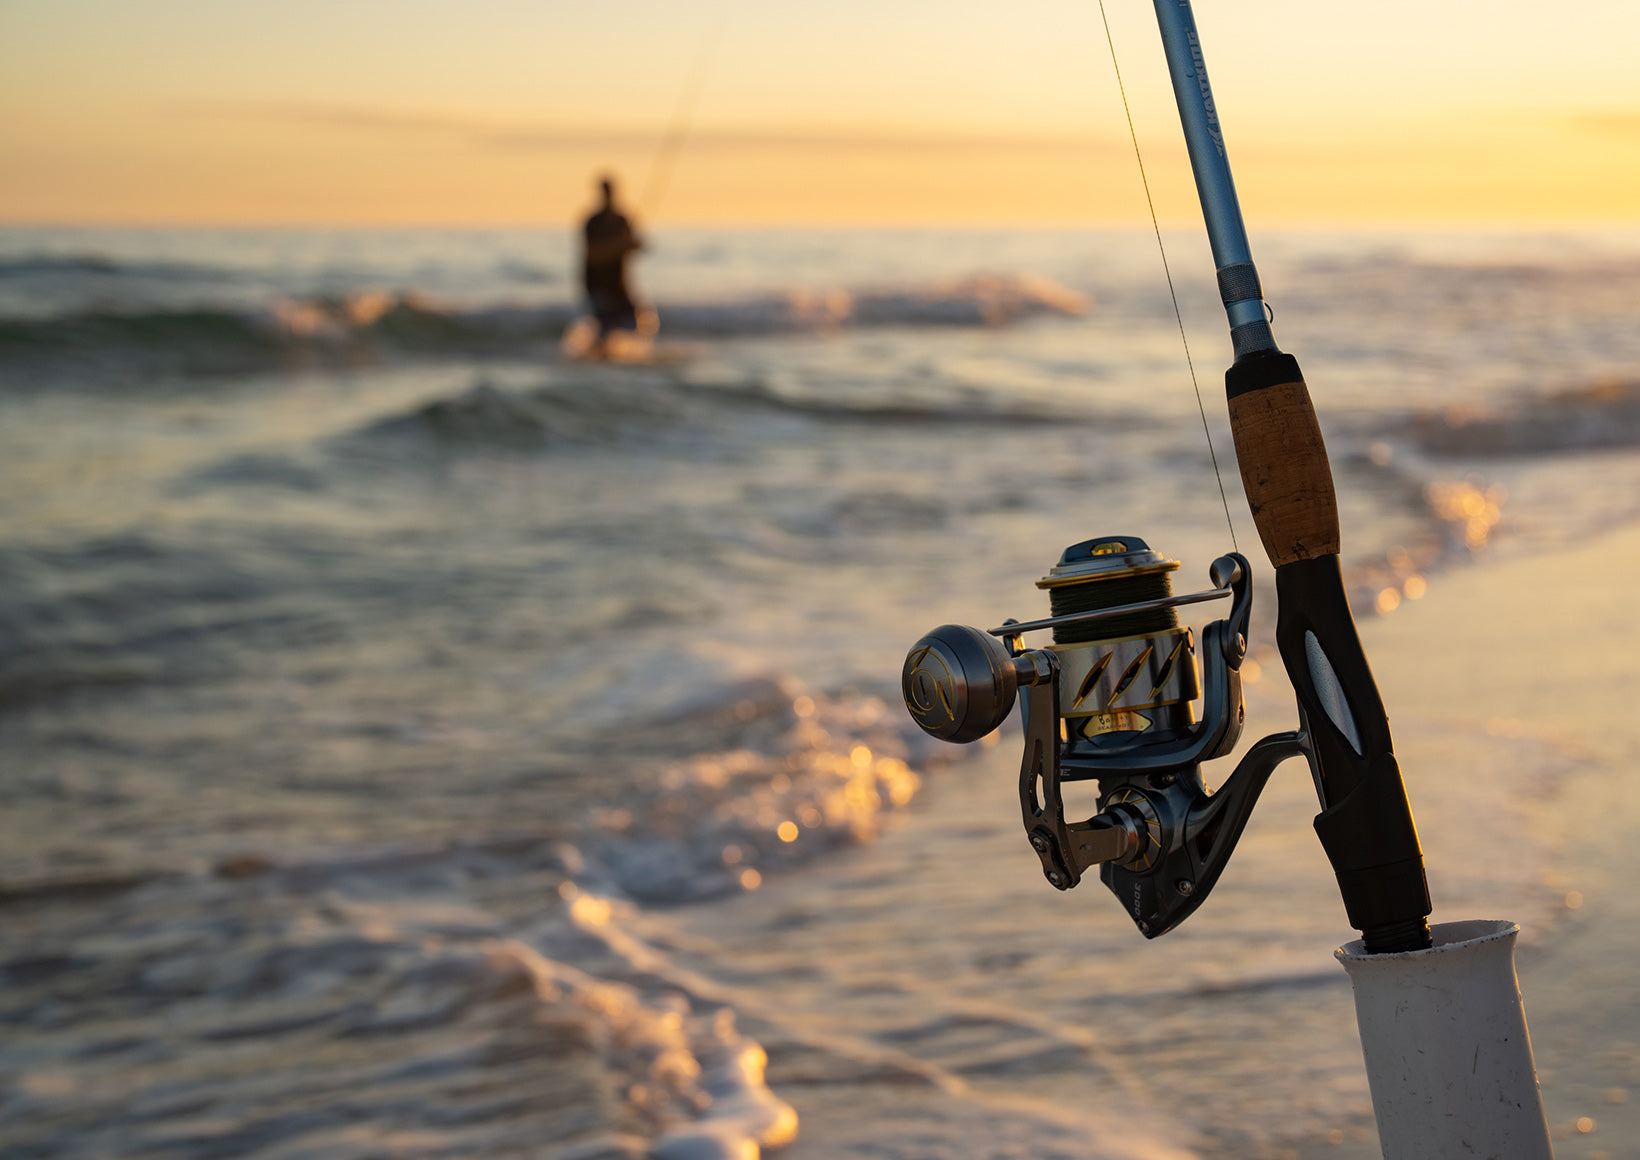 On Foot Angler: Wade Fishing: Gear, Bait & Tackle